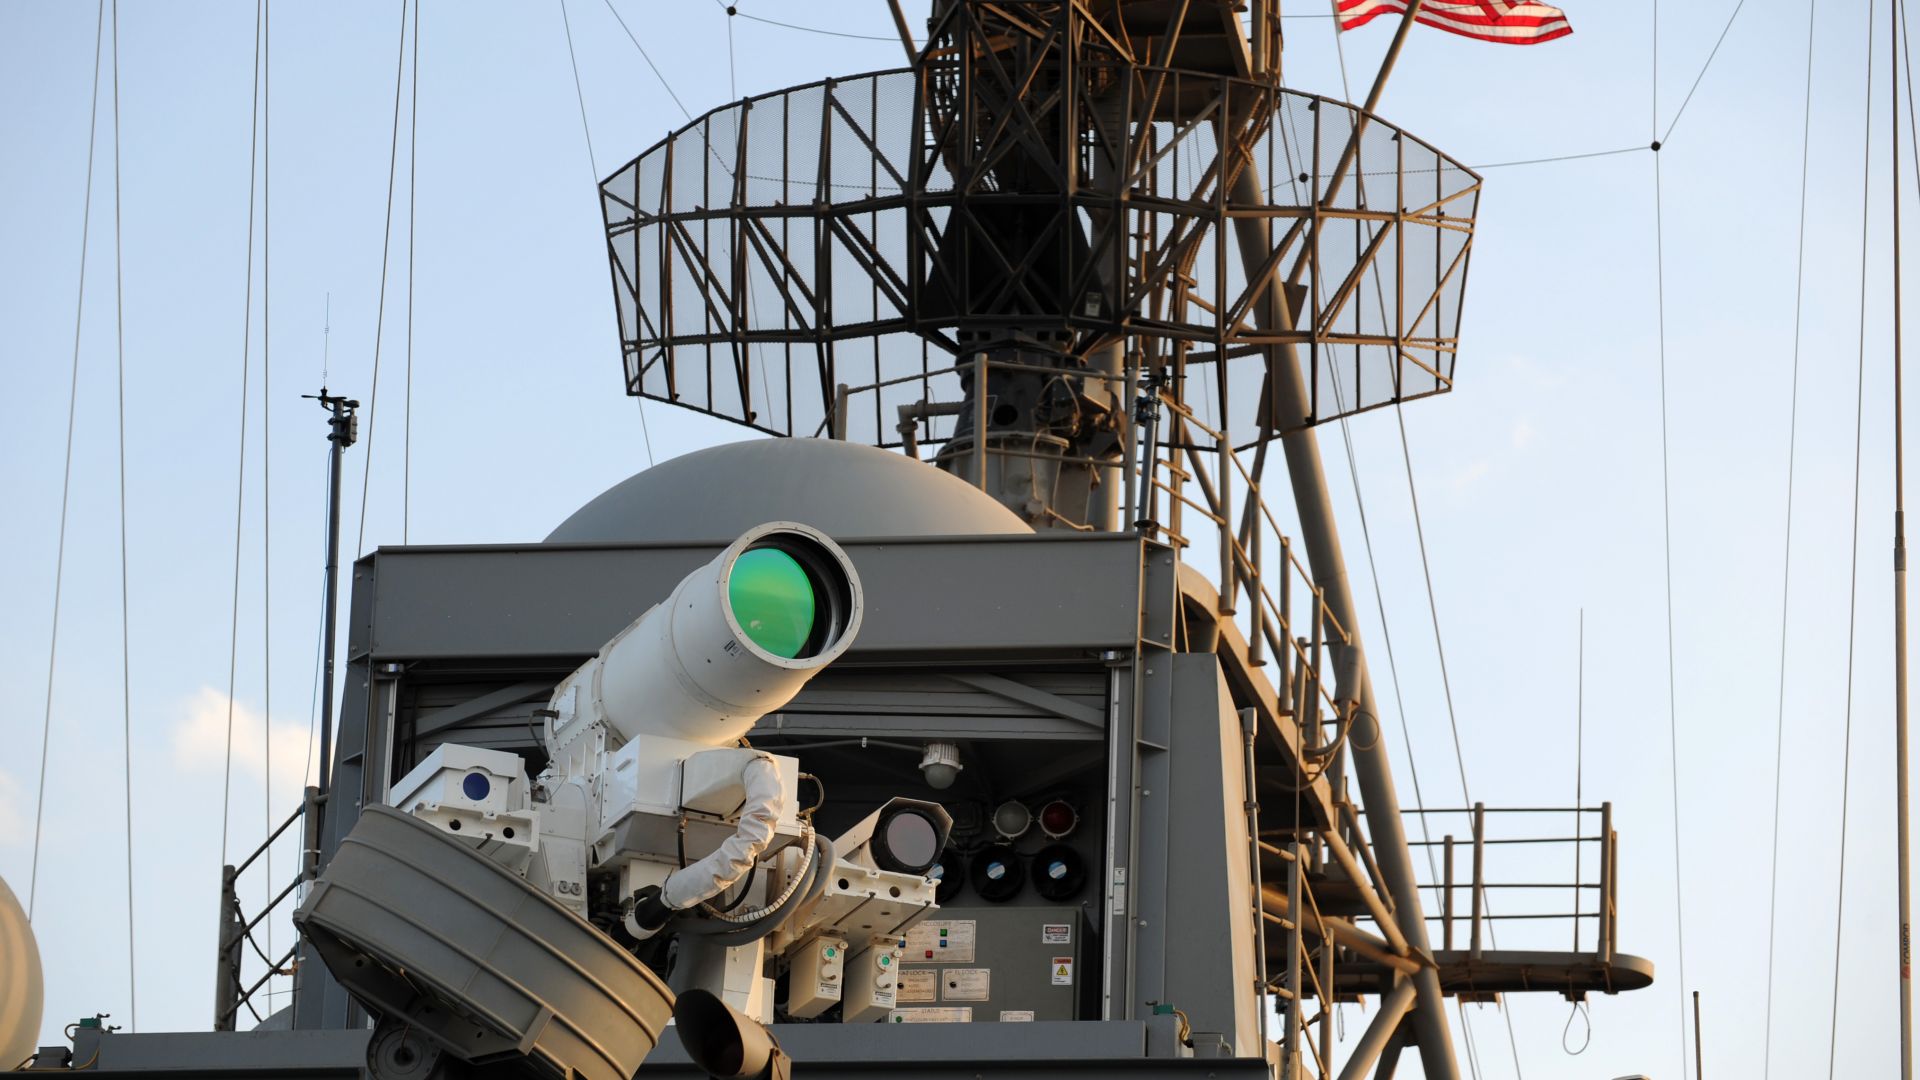 Система Лазерного Оружия, Армия США, ЛАВС, Laser Weapon System, LAWs, USA Army, United States Navy (horizontal)